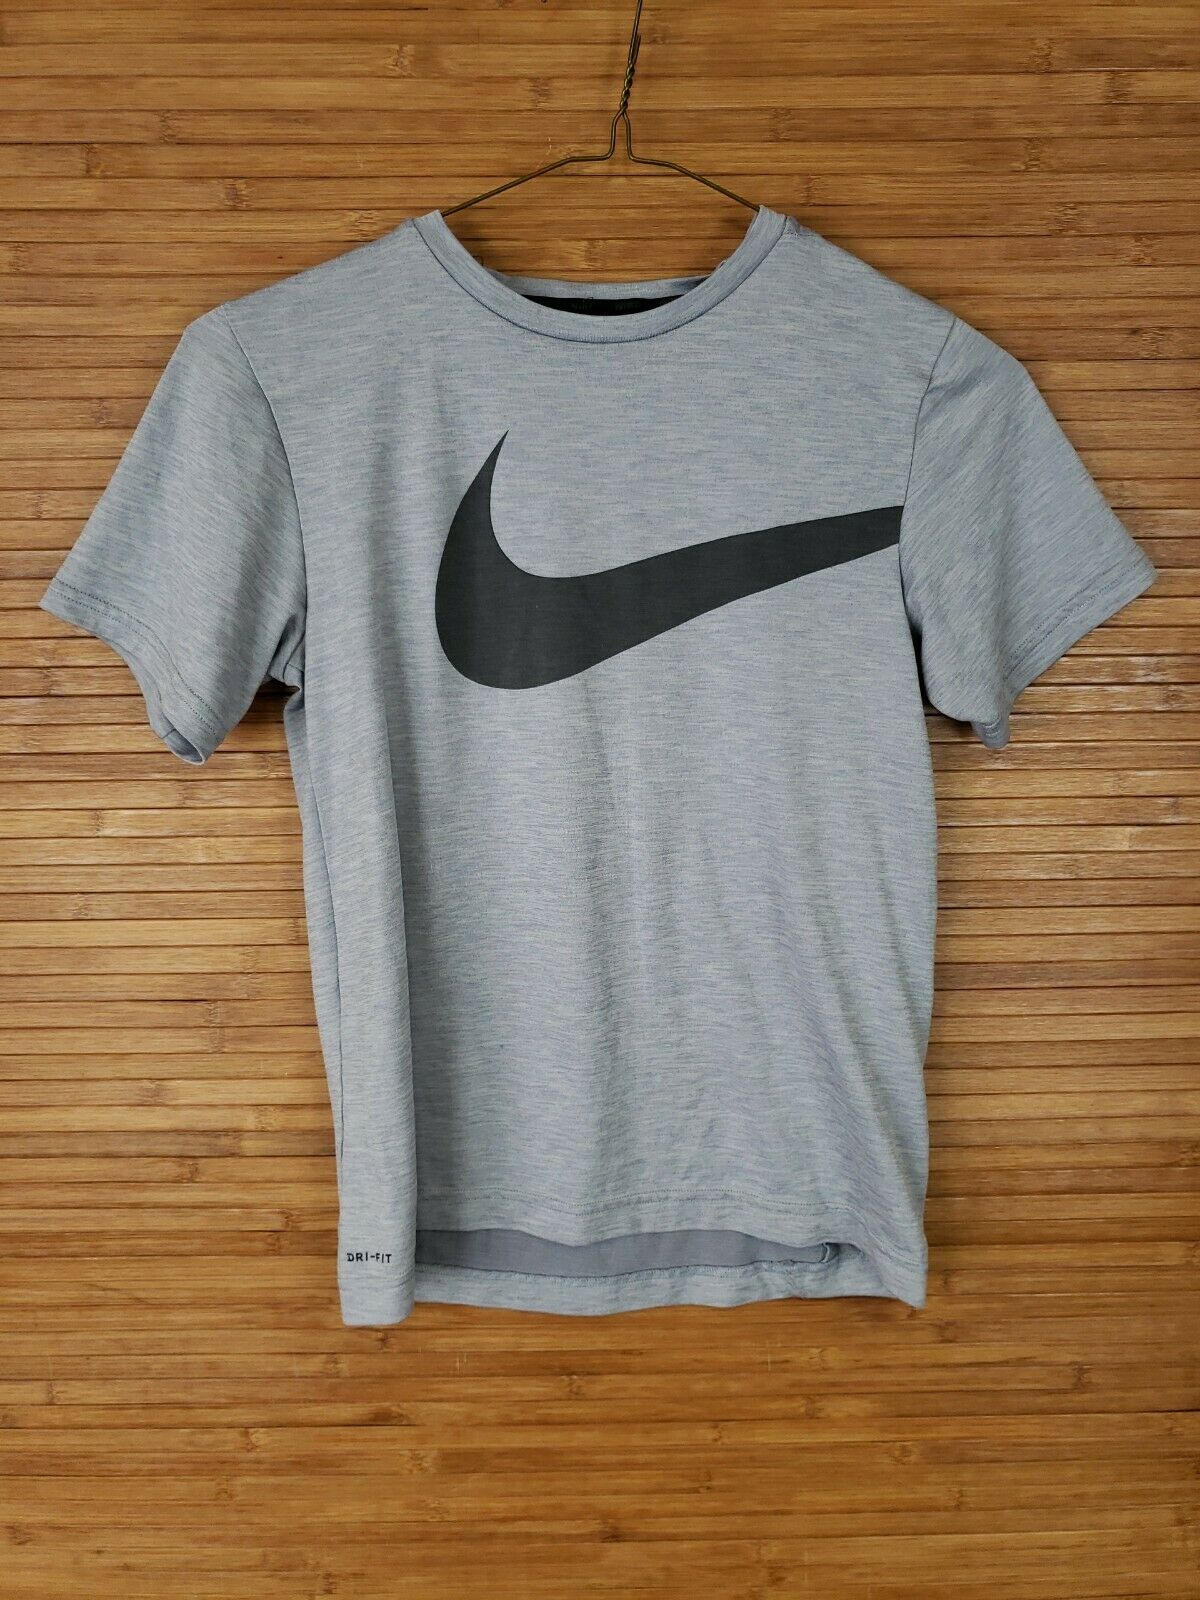 Nike Dri-fit Gray Swoosh Athletic Short Sleeve T-shirt Youth Size Large